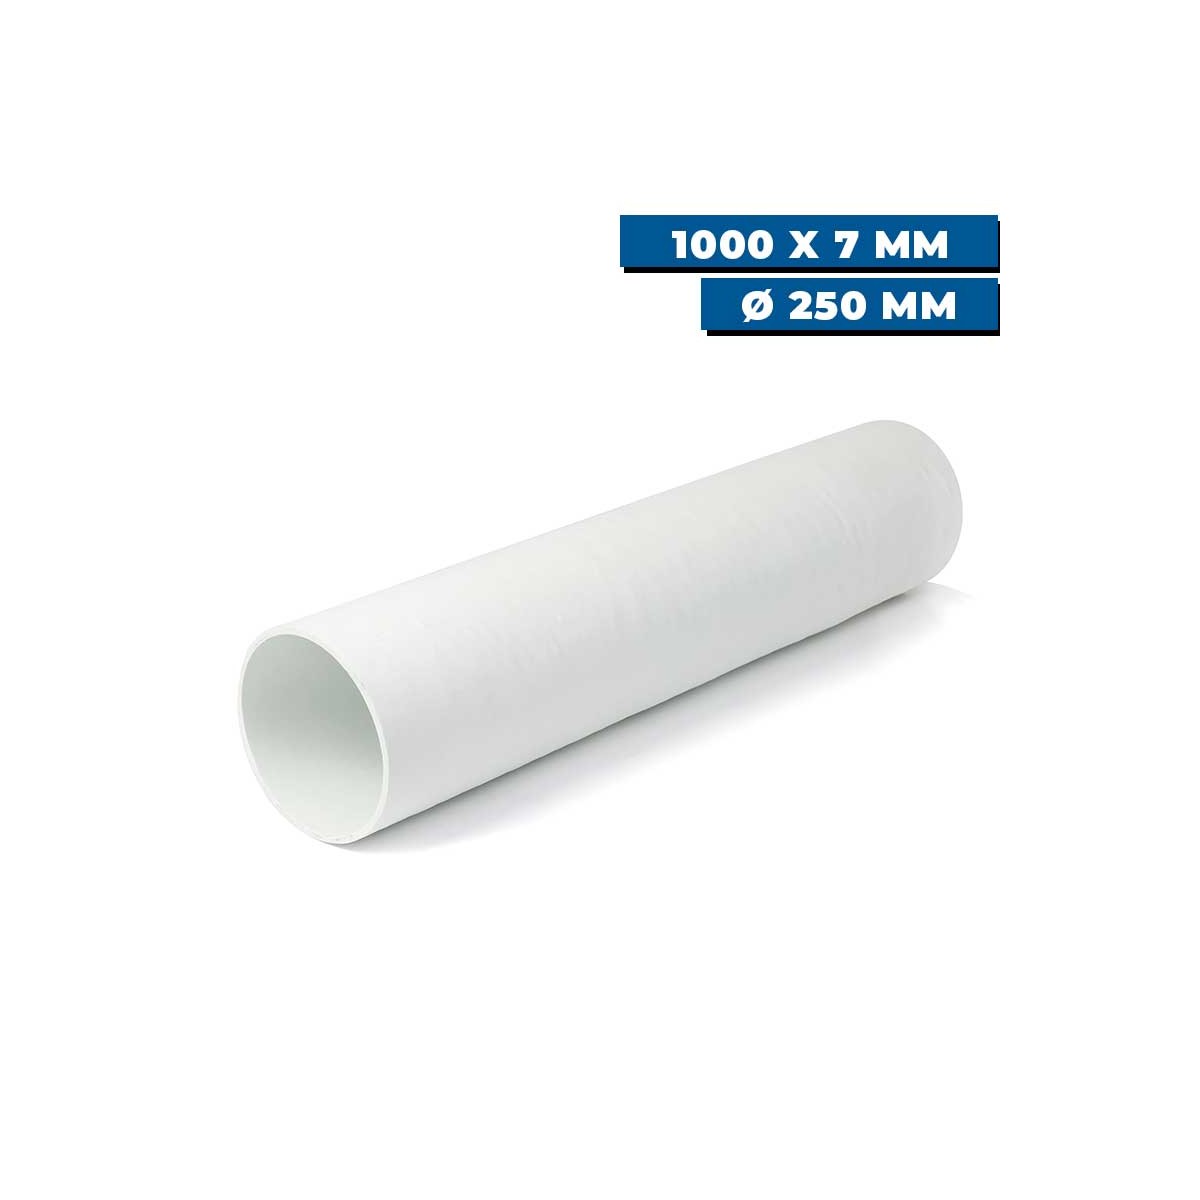 Tunnel polyester pour propulseur Ø 250 mm 1000 x 7 mm